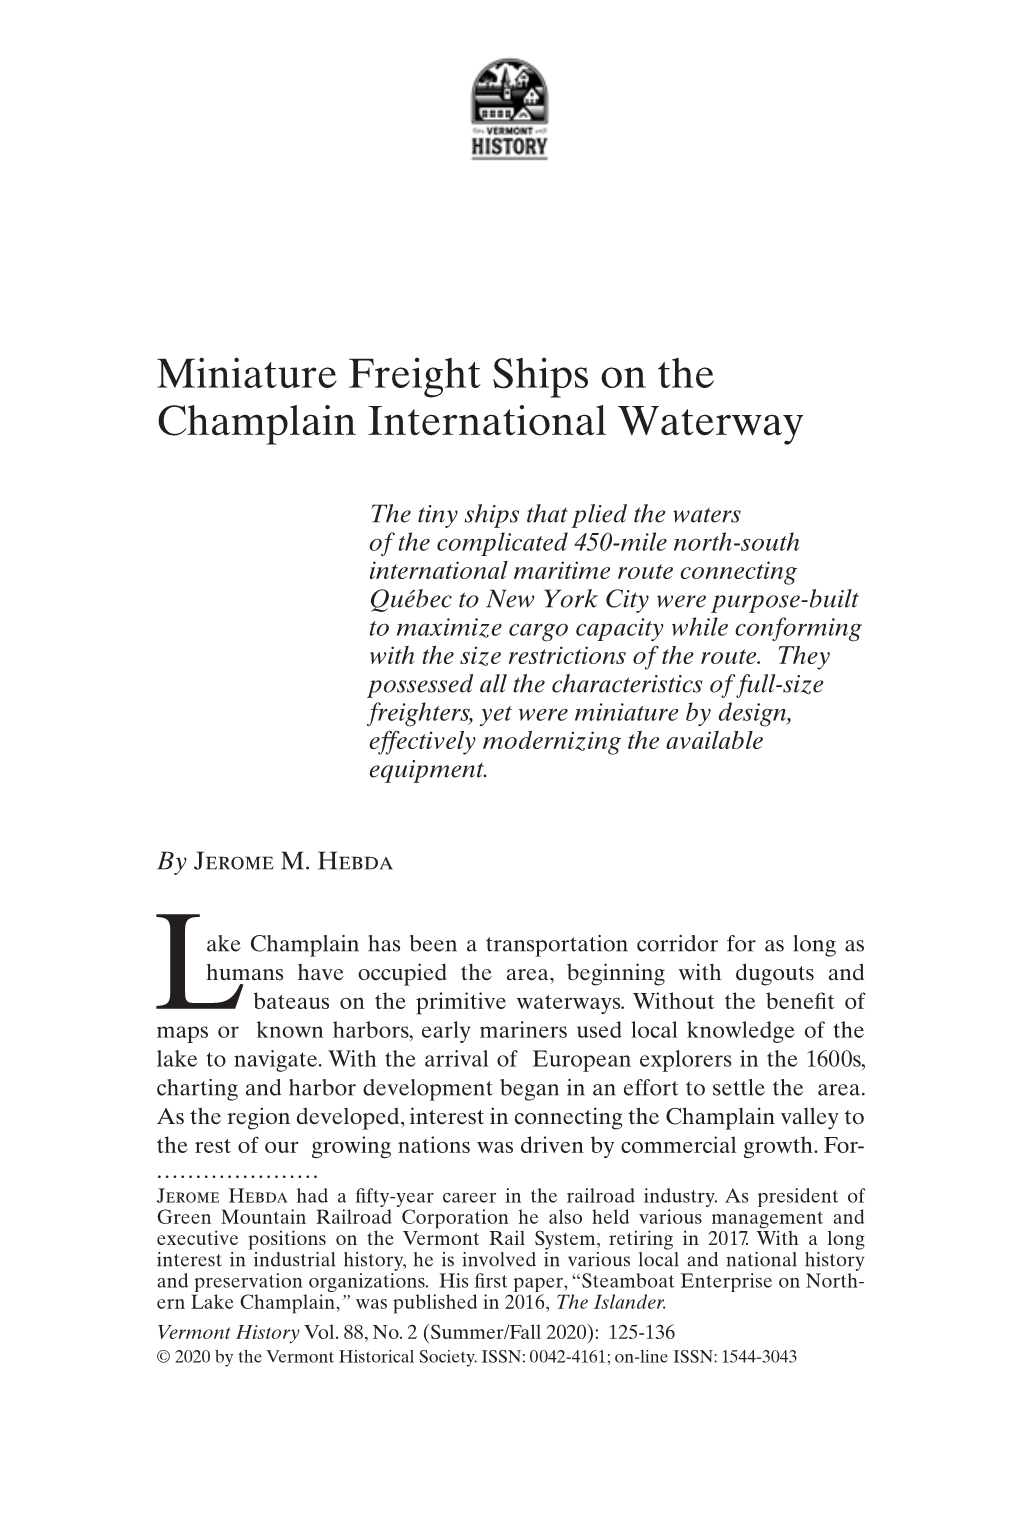 Miniature Freight Ships on the Champlain International Waterway